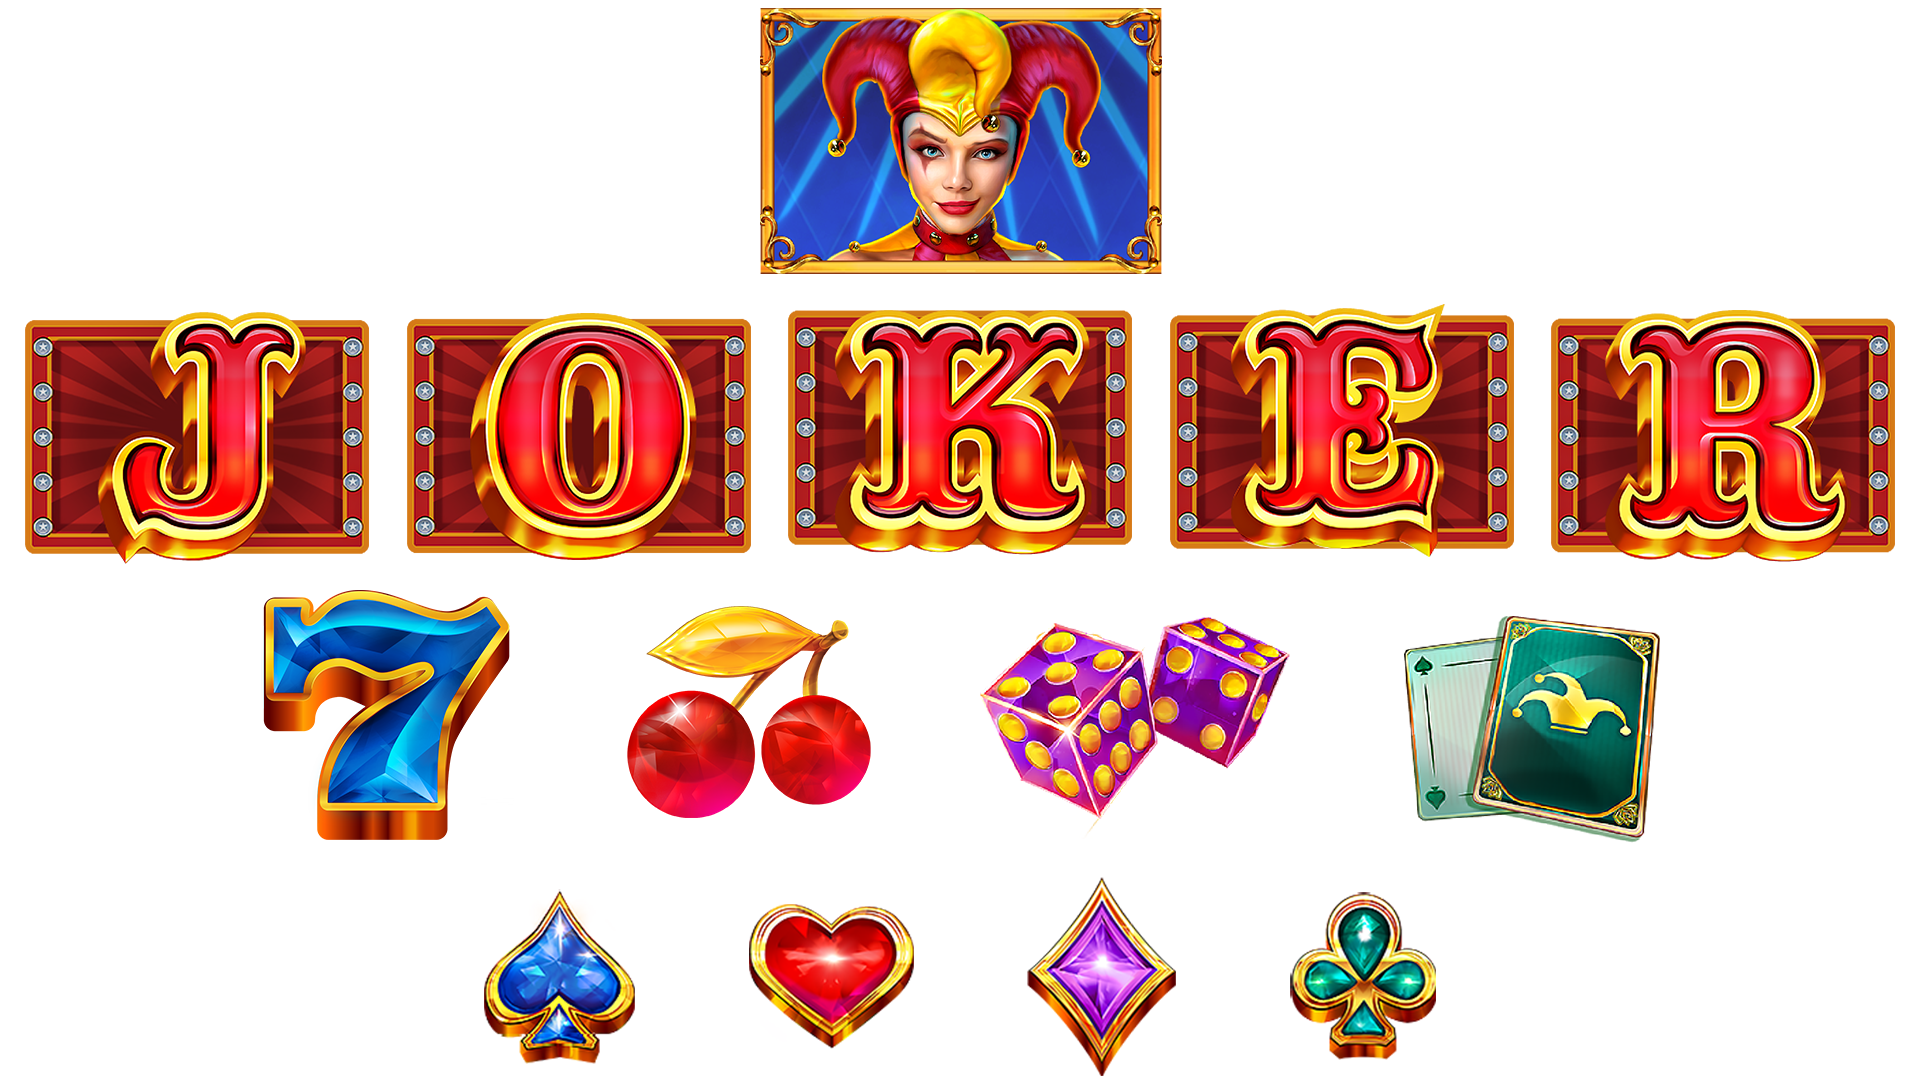 Fire and Roses Joker slot symbols